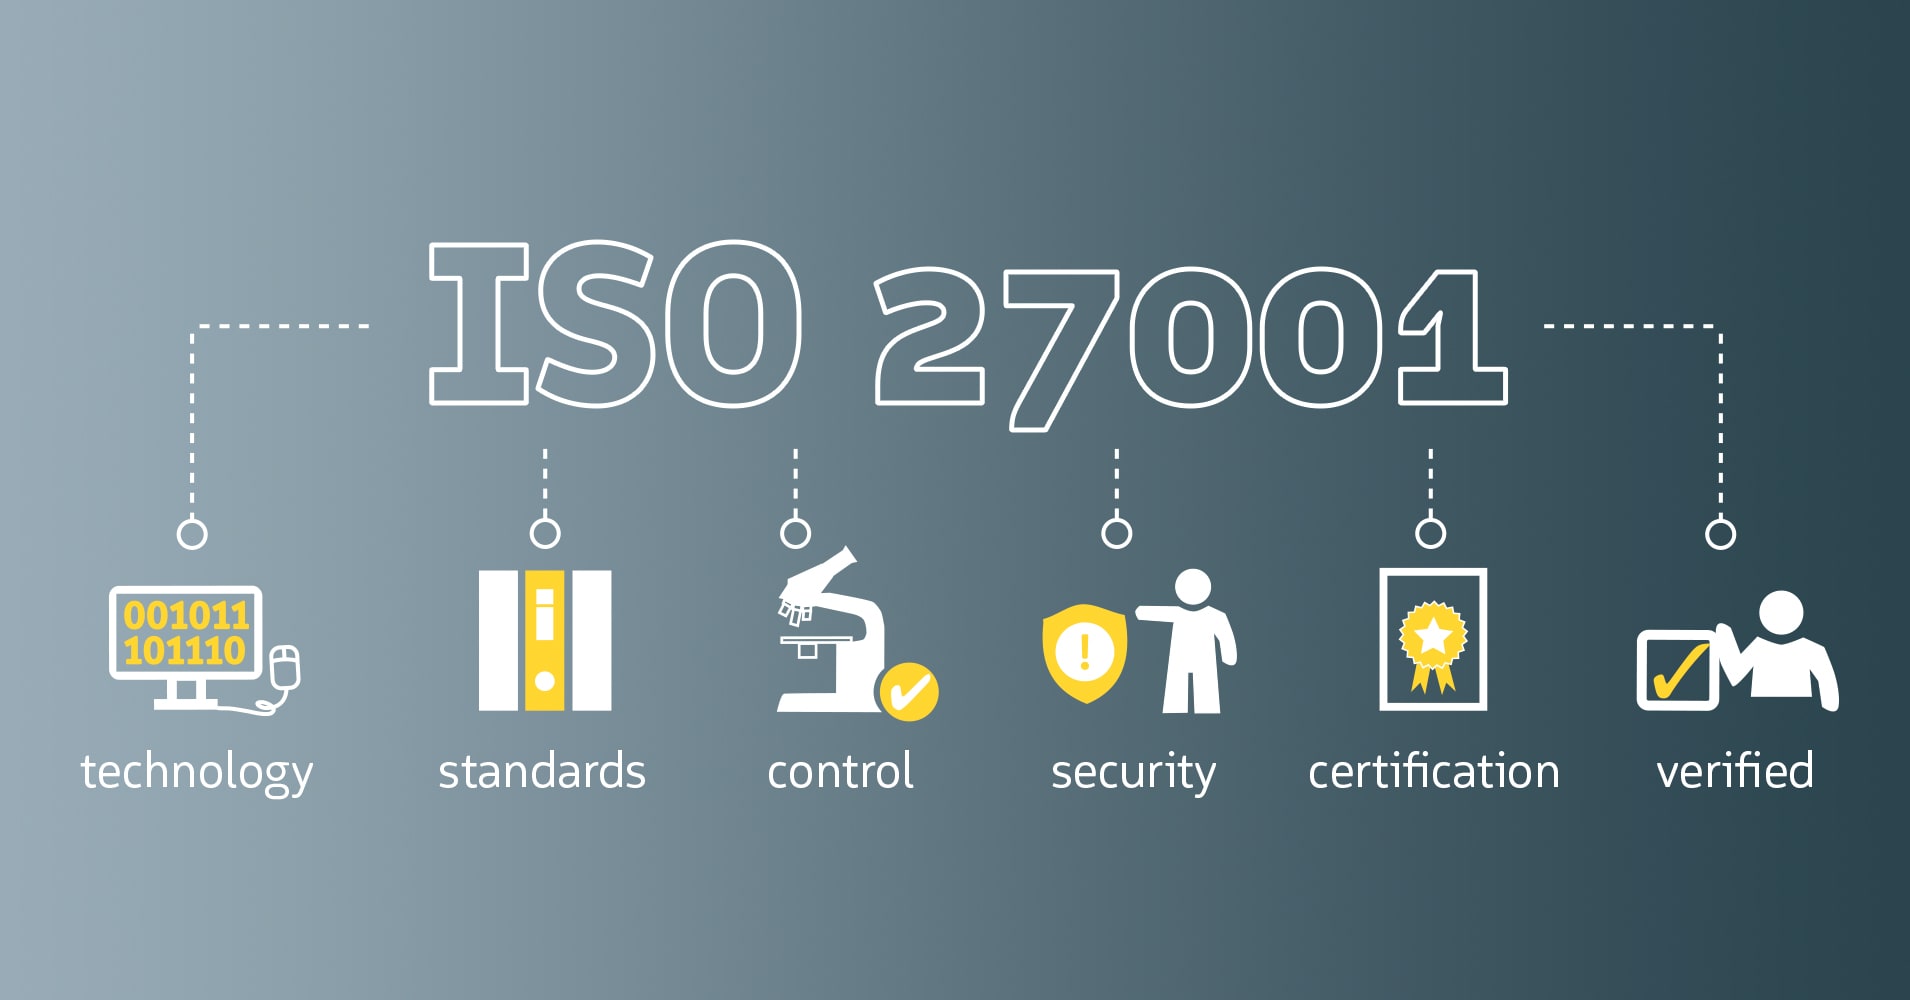 SKIDATA is ISO 27001 certified